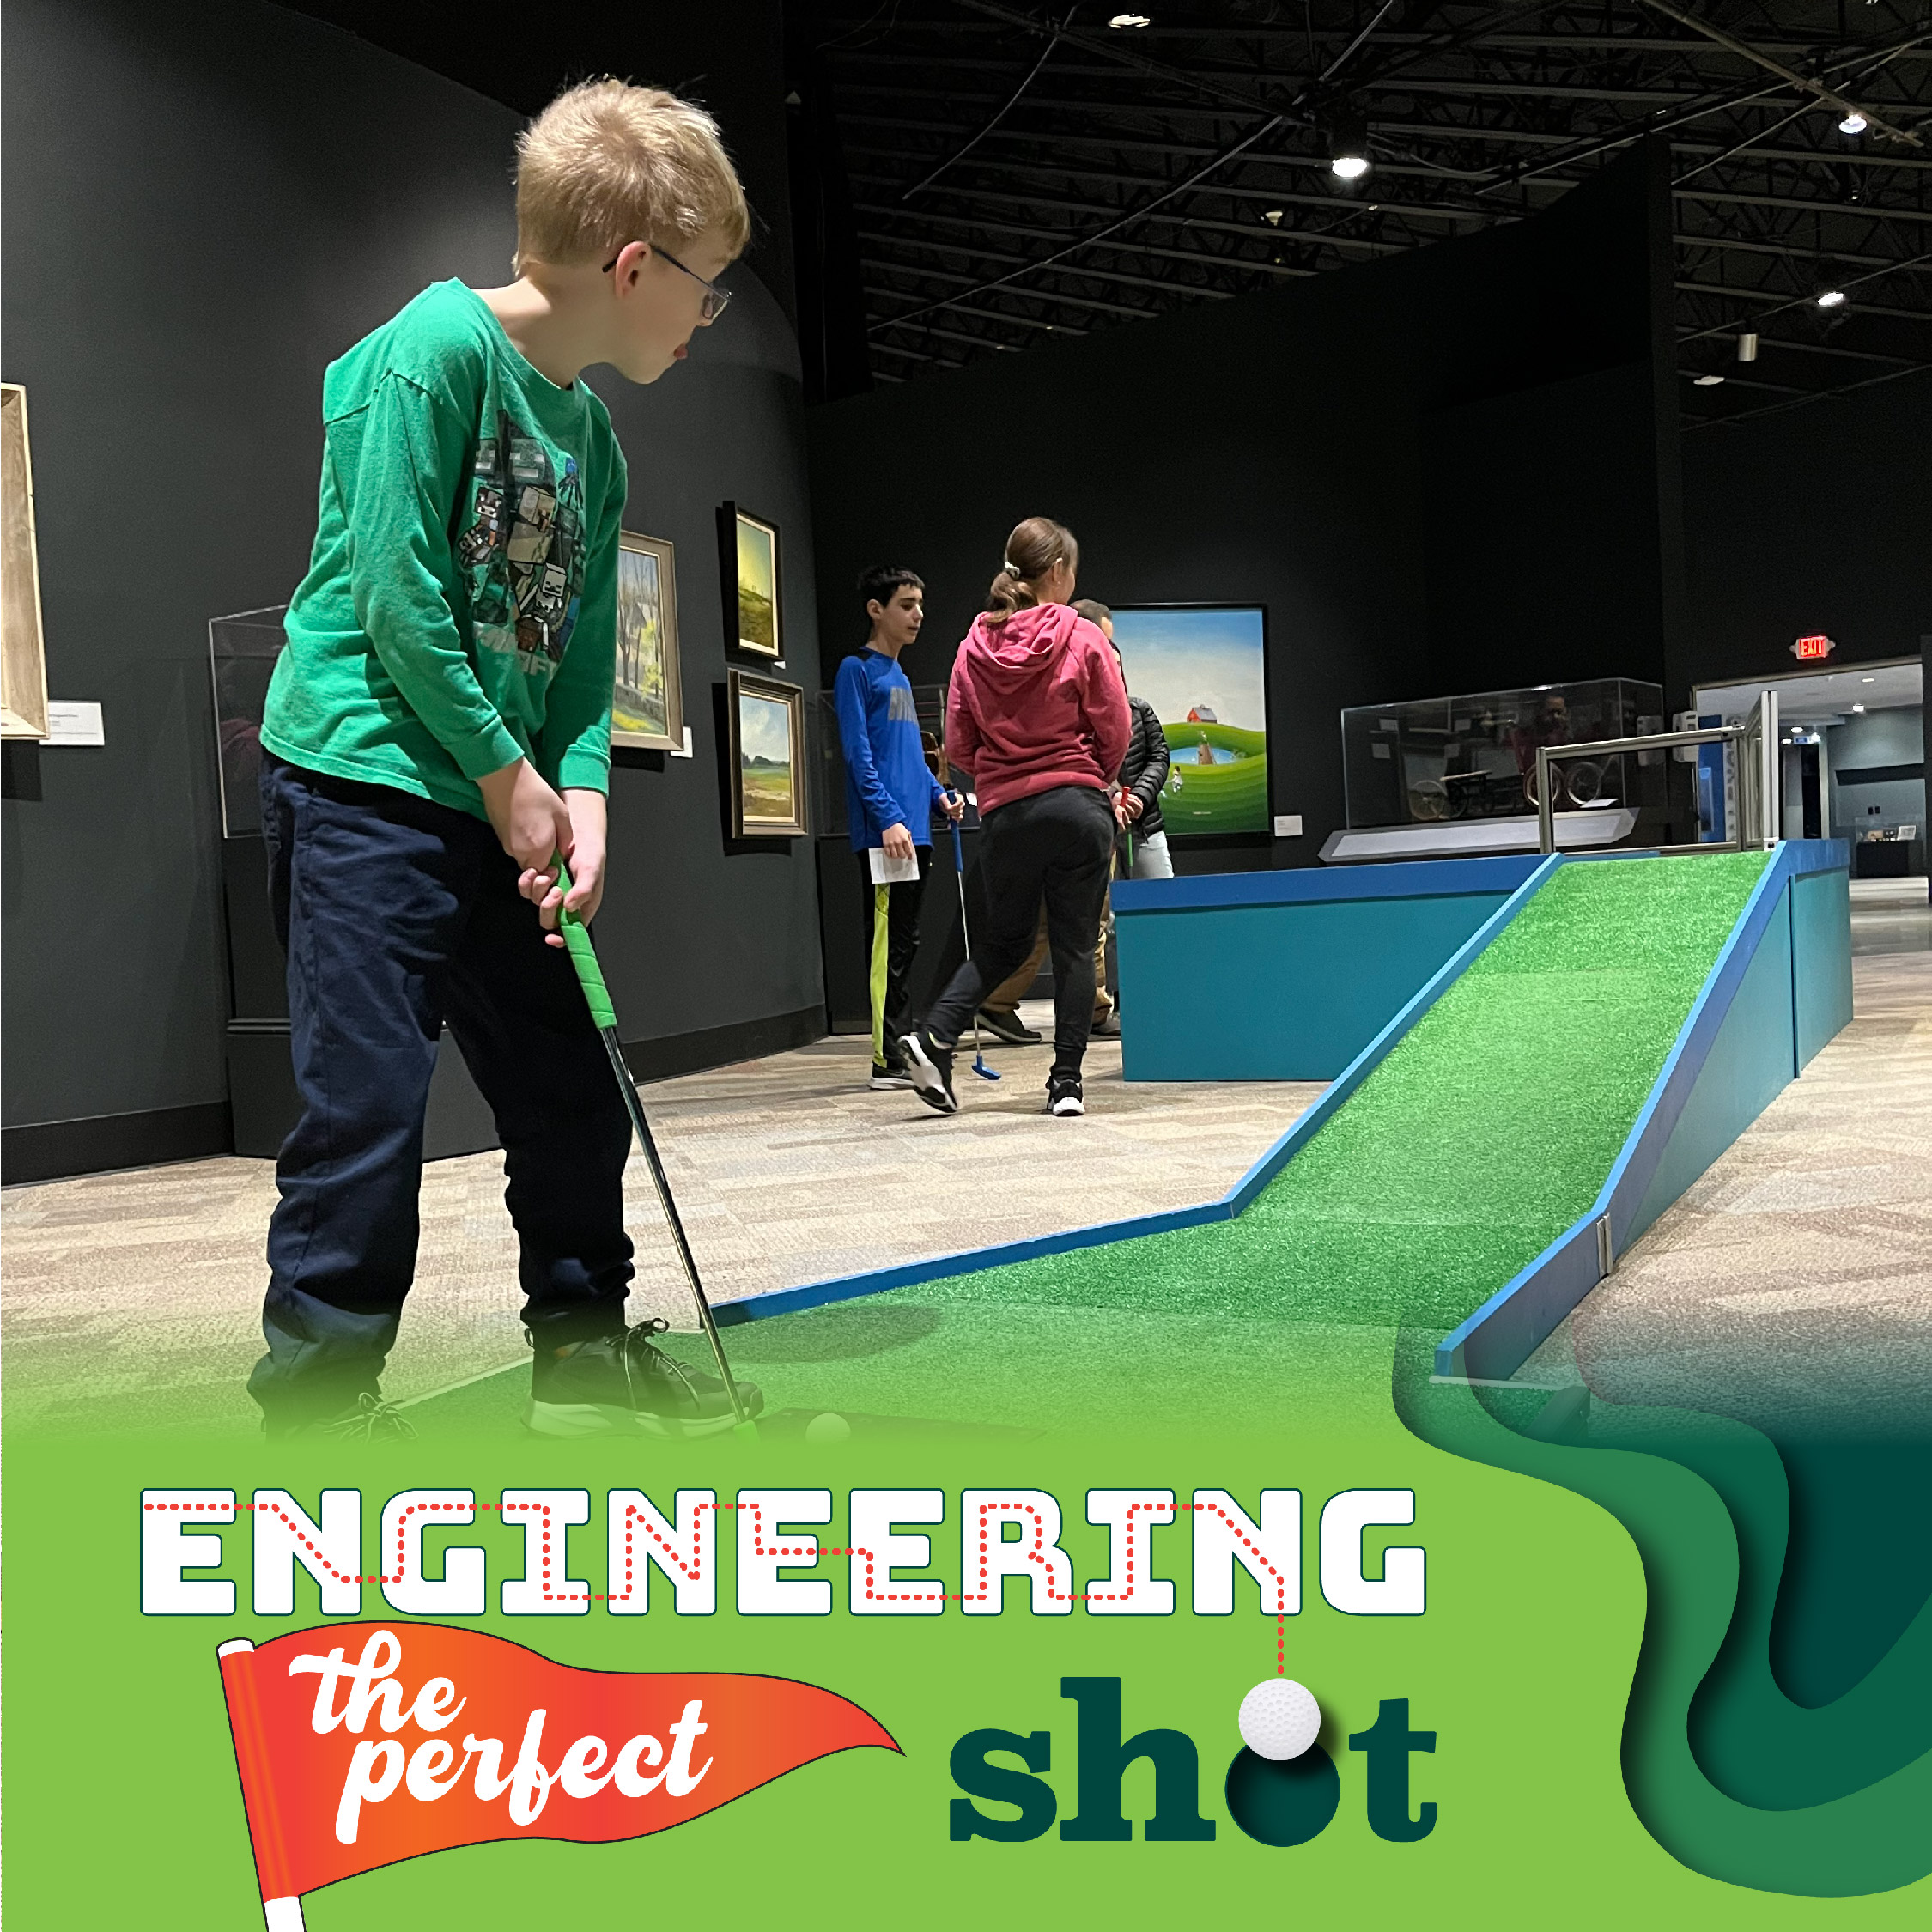 Engineering the Perfect Shot! The Interactive Minigolf Exhibit